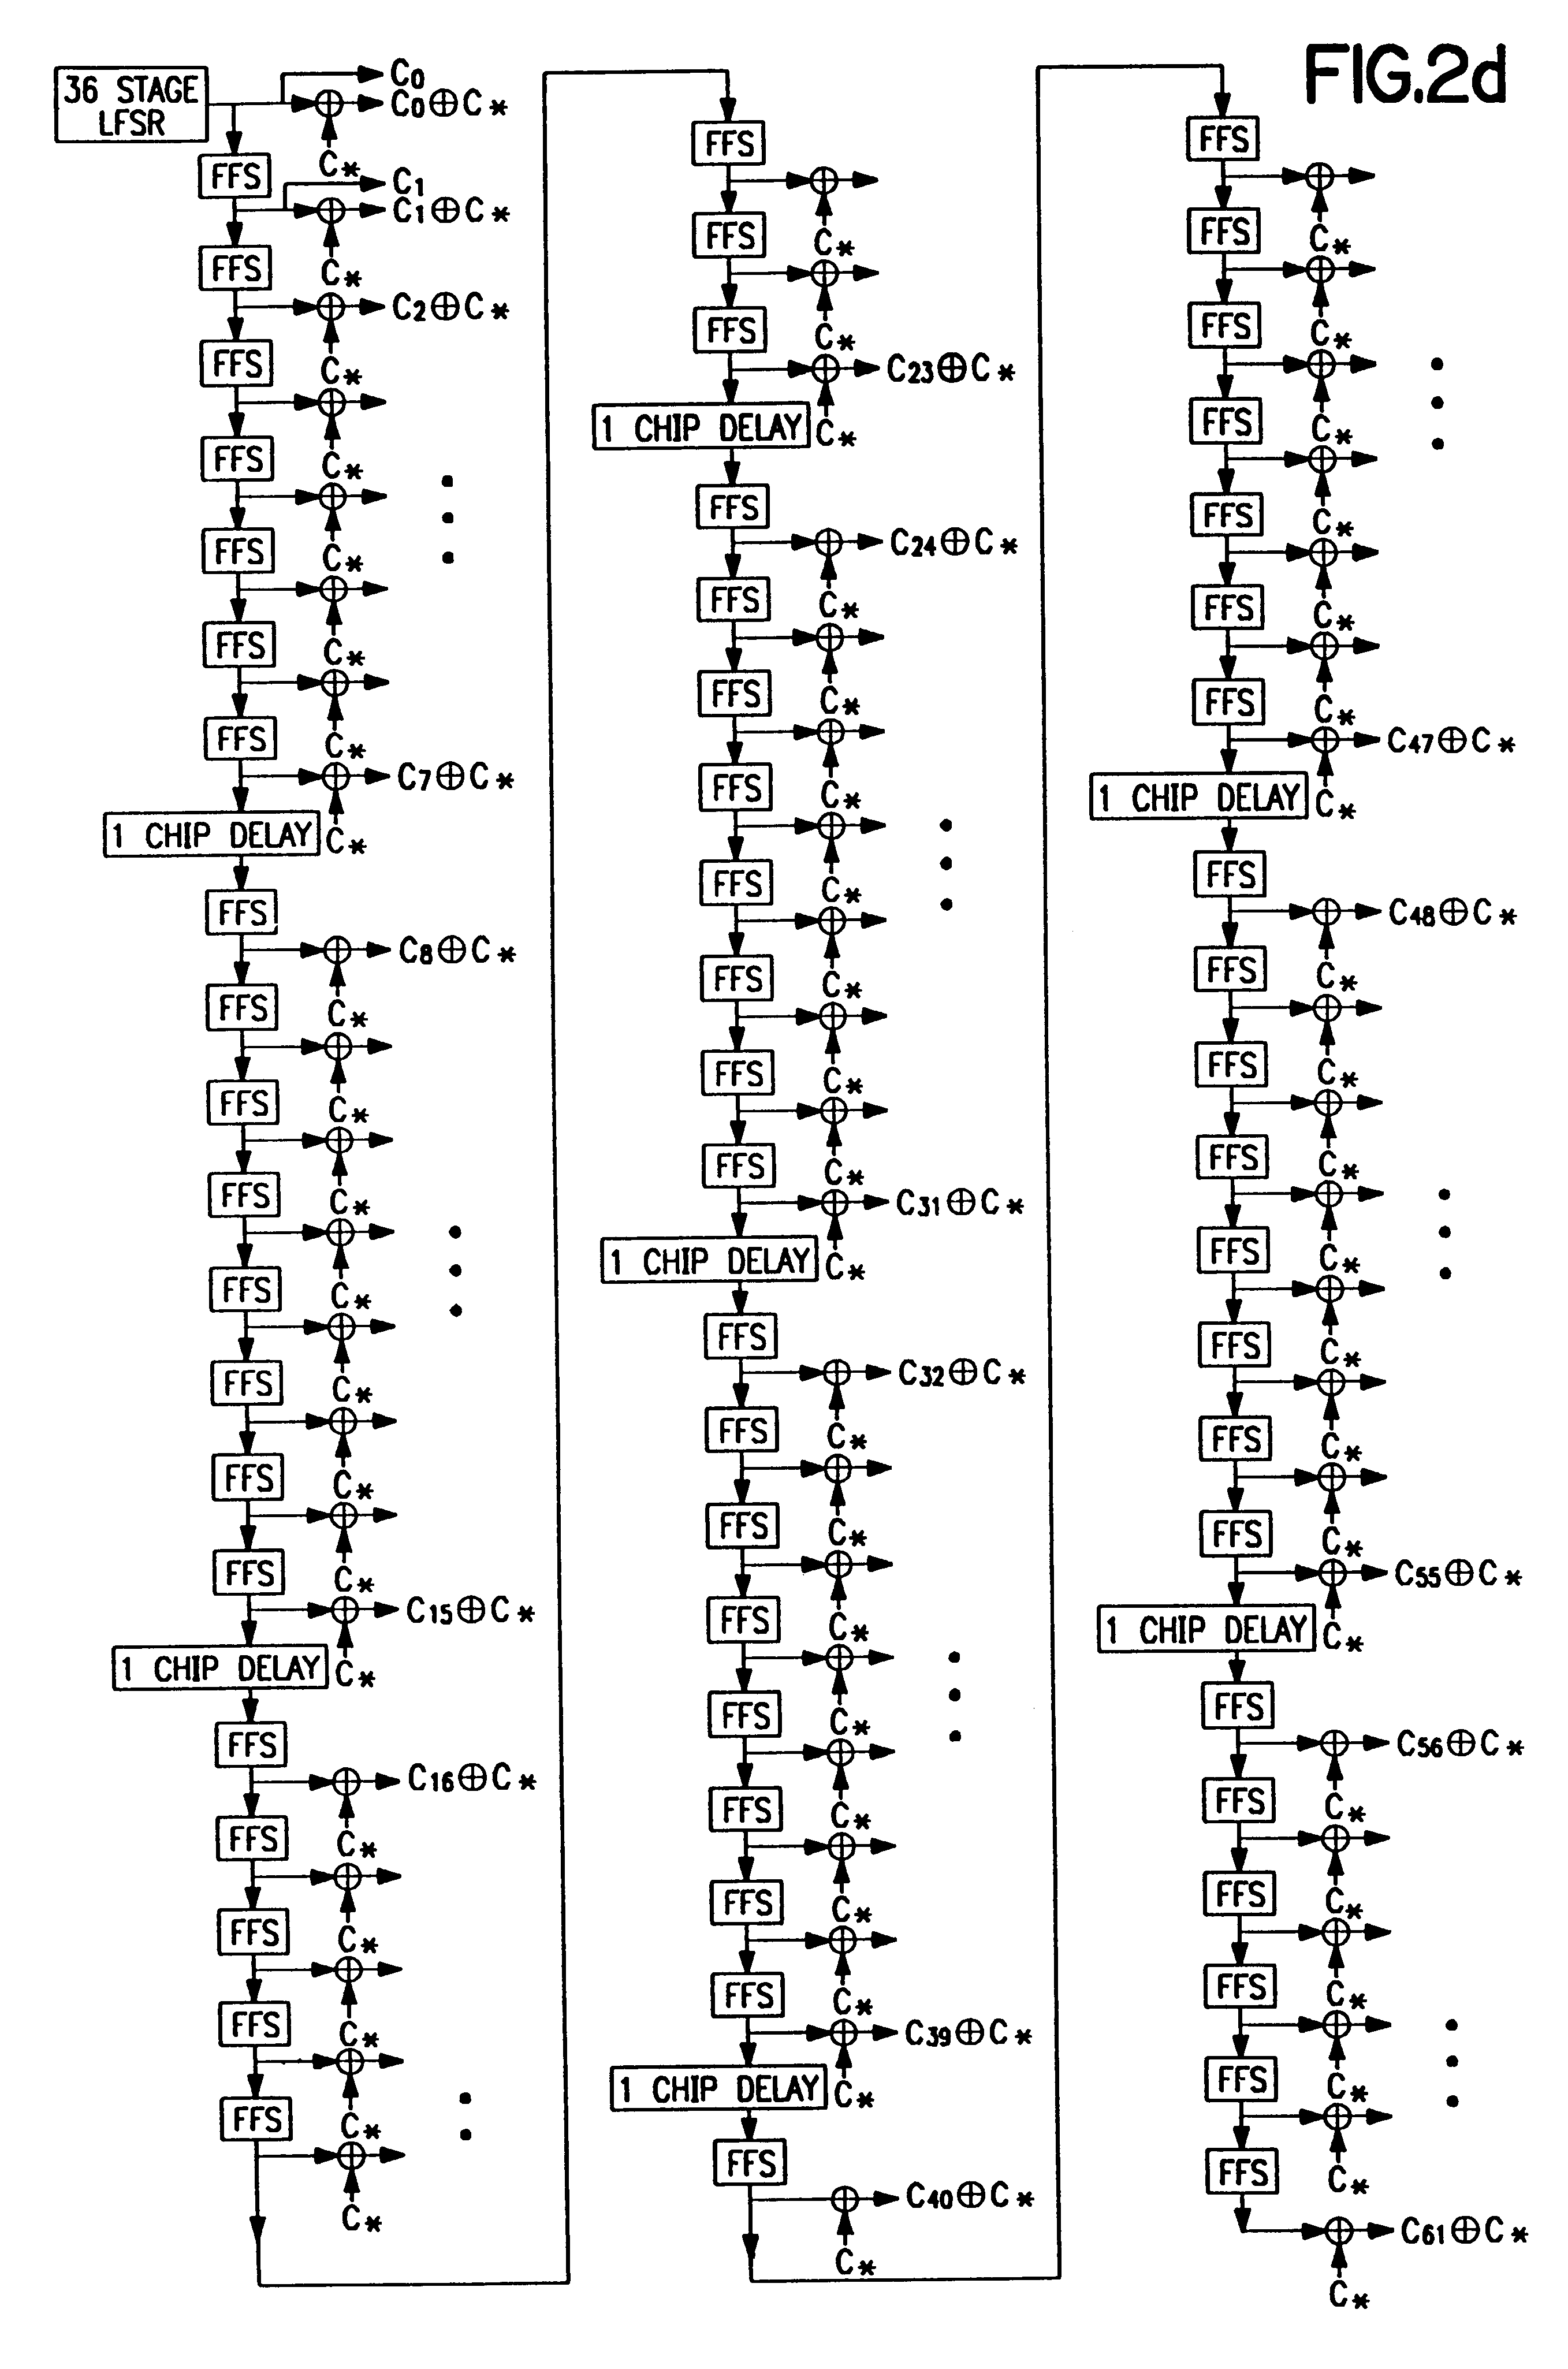 Code sequence generator in a CDMA modem